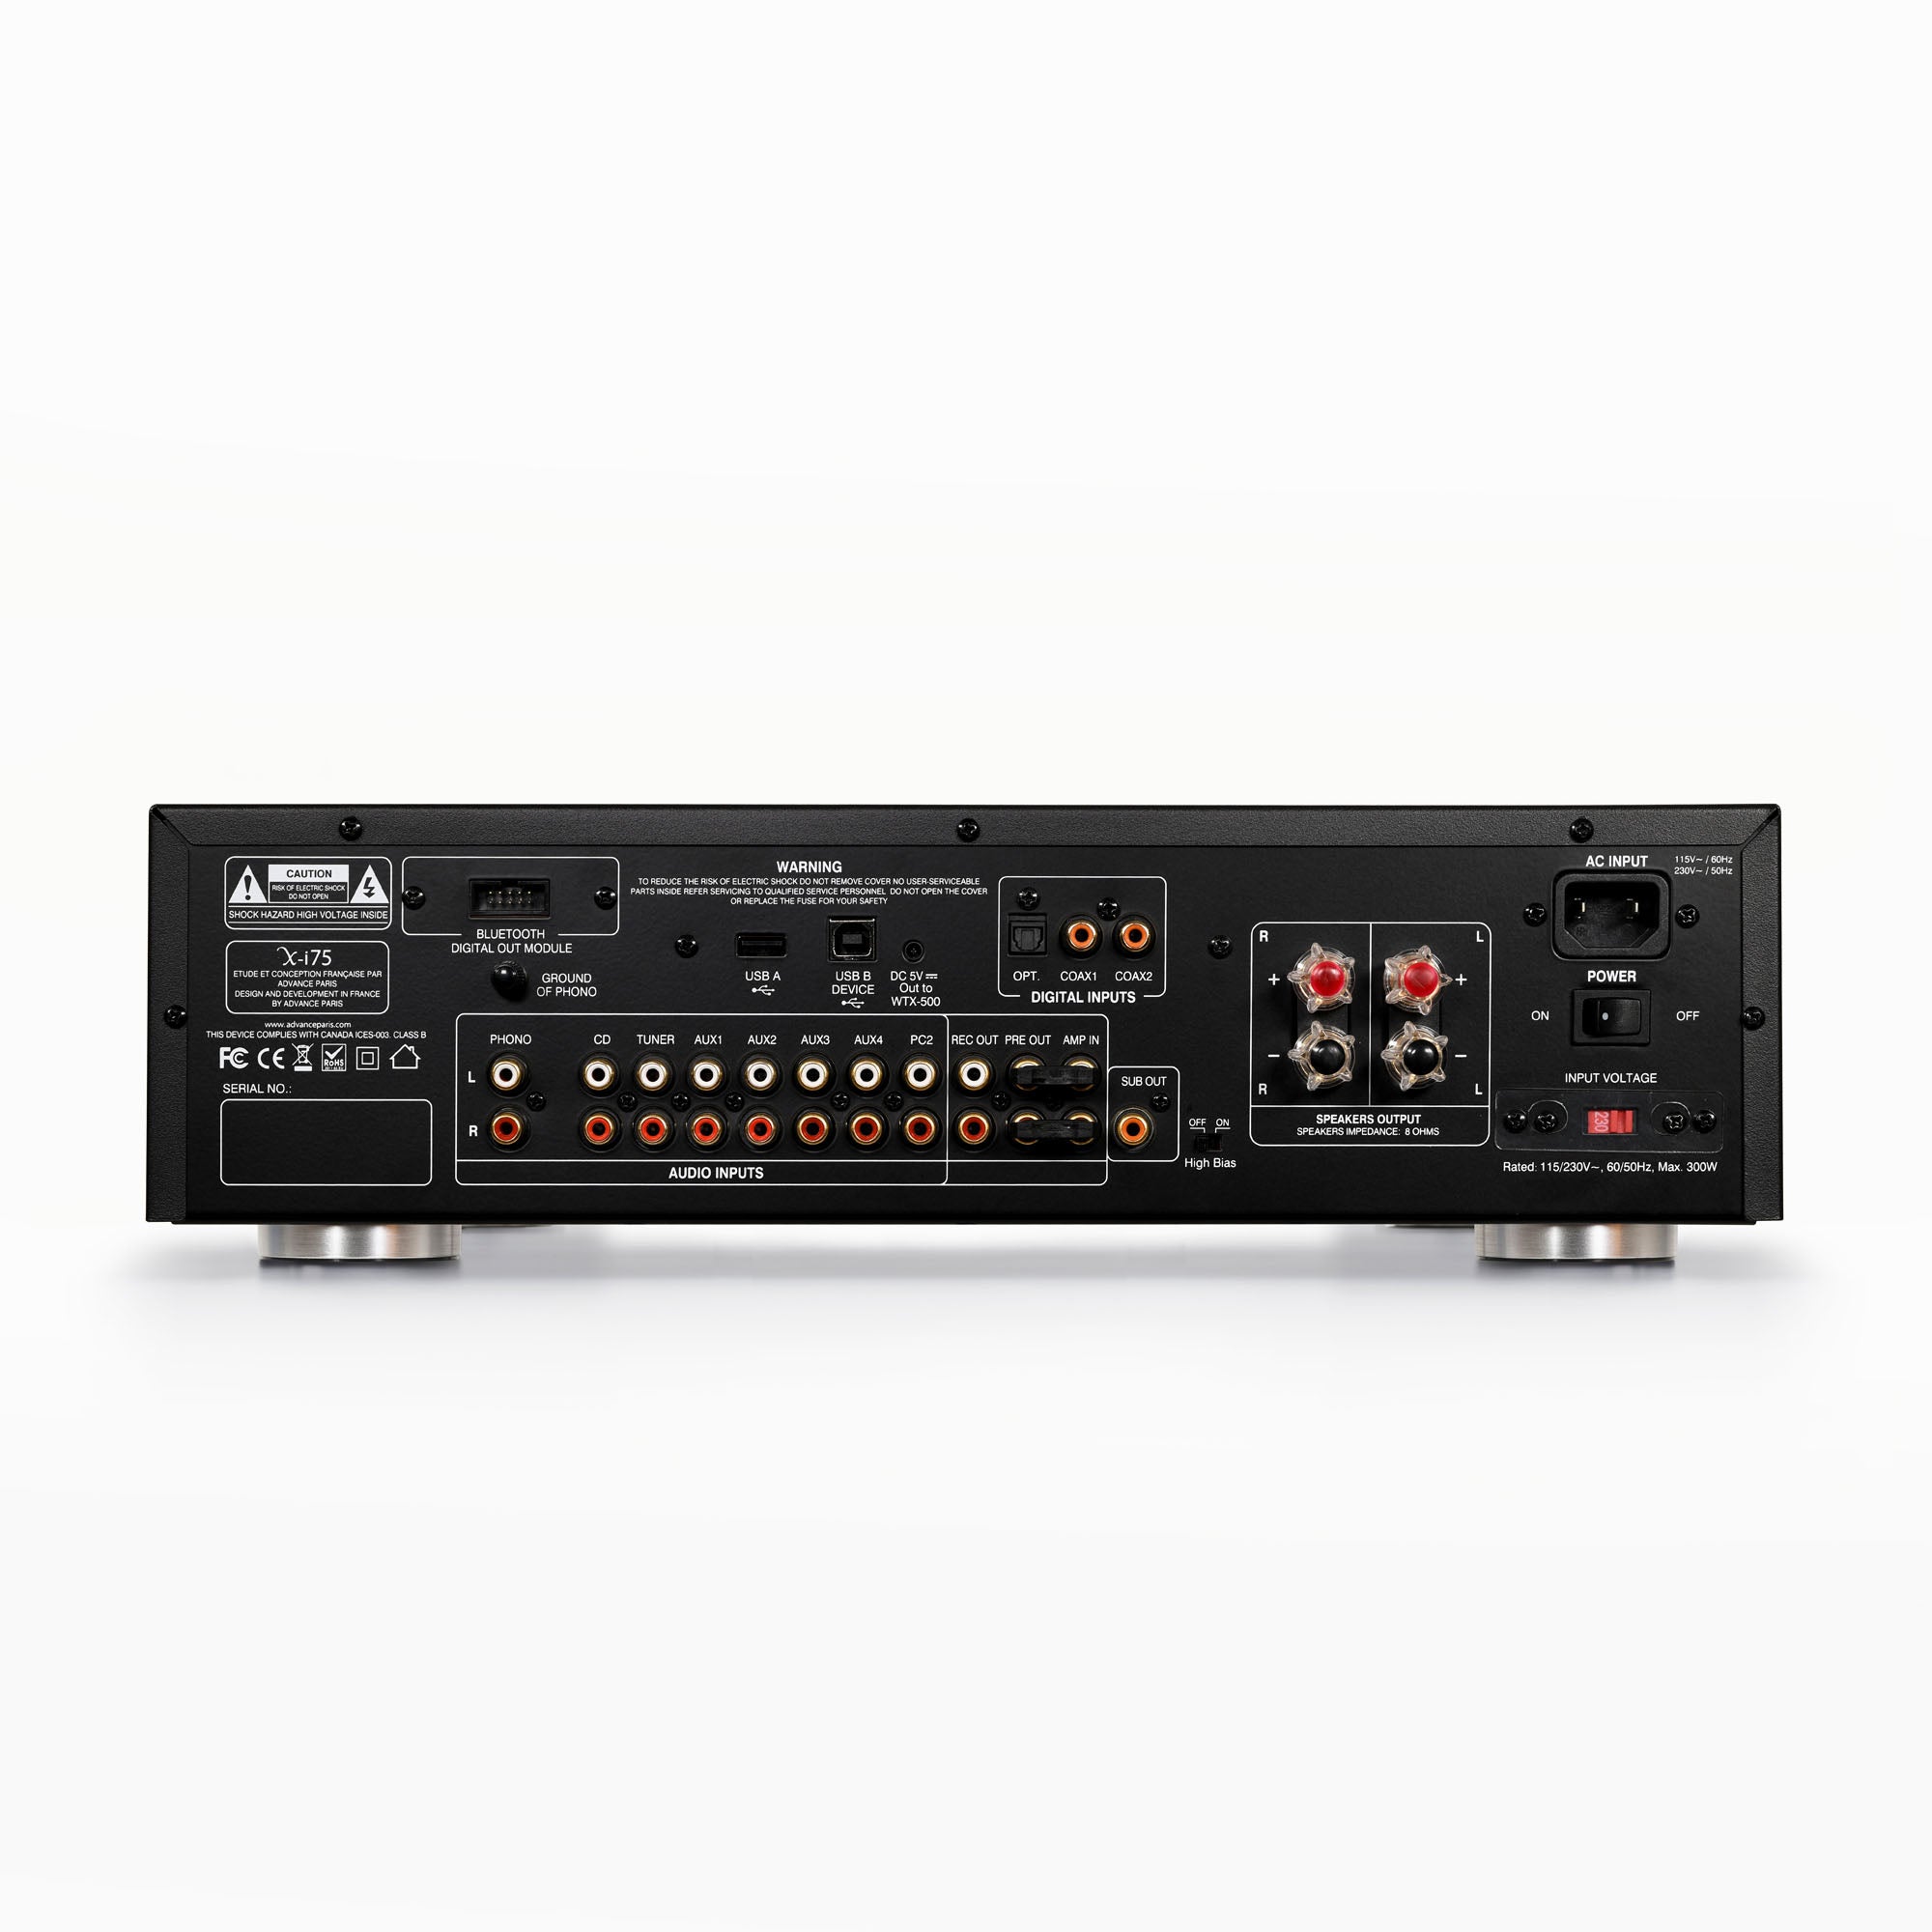 Advance Paris X-i75 BT Integrated  Stereo Amplifier